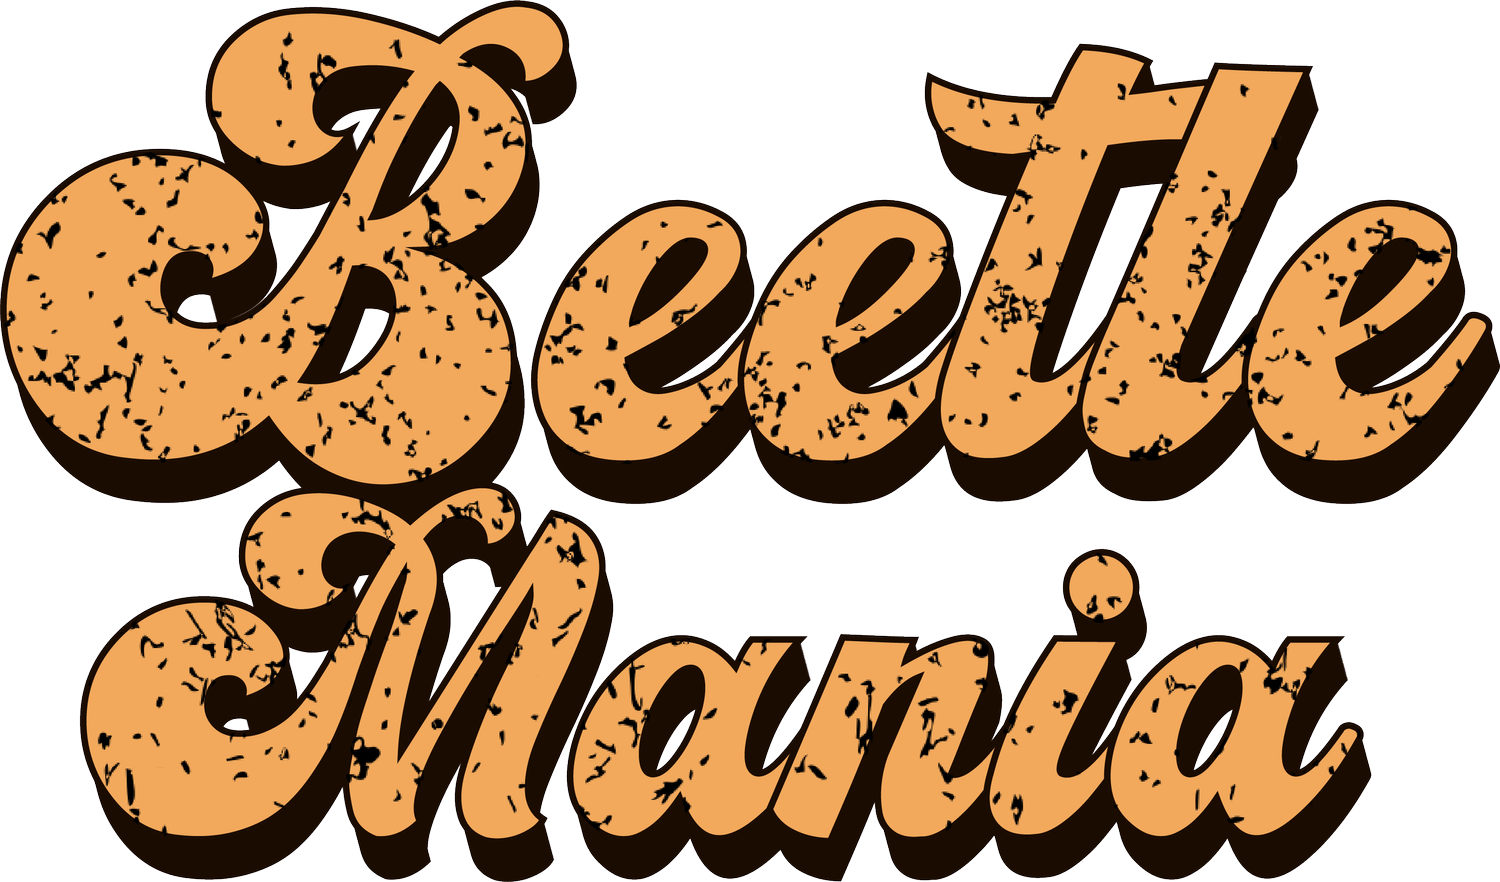 Beetlemania logo